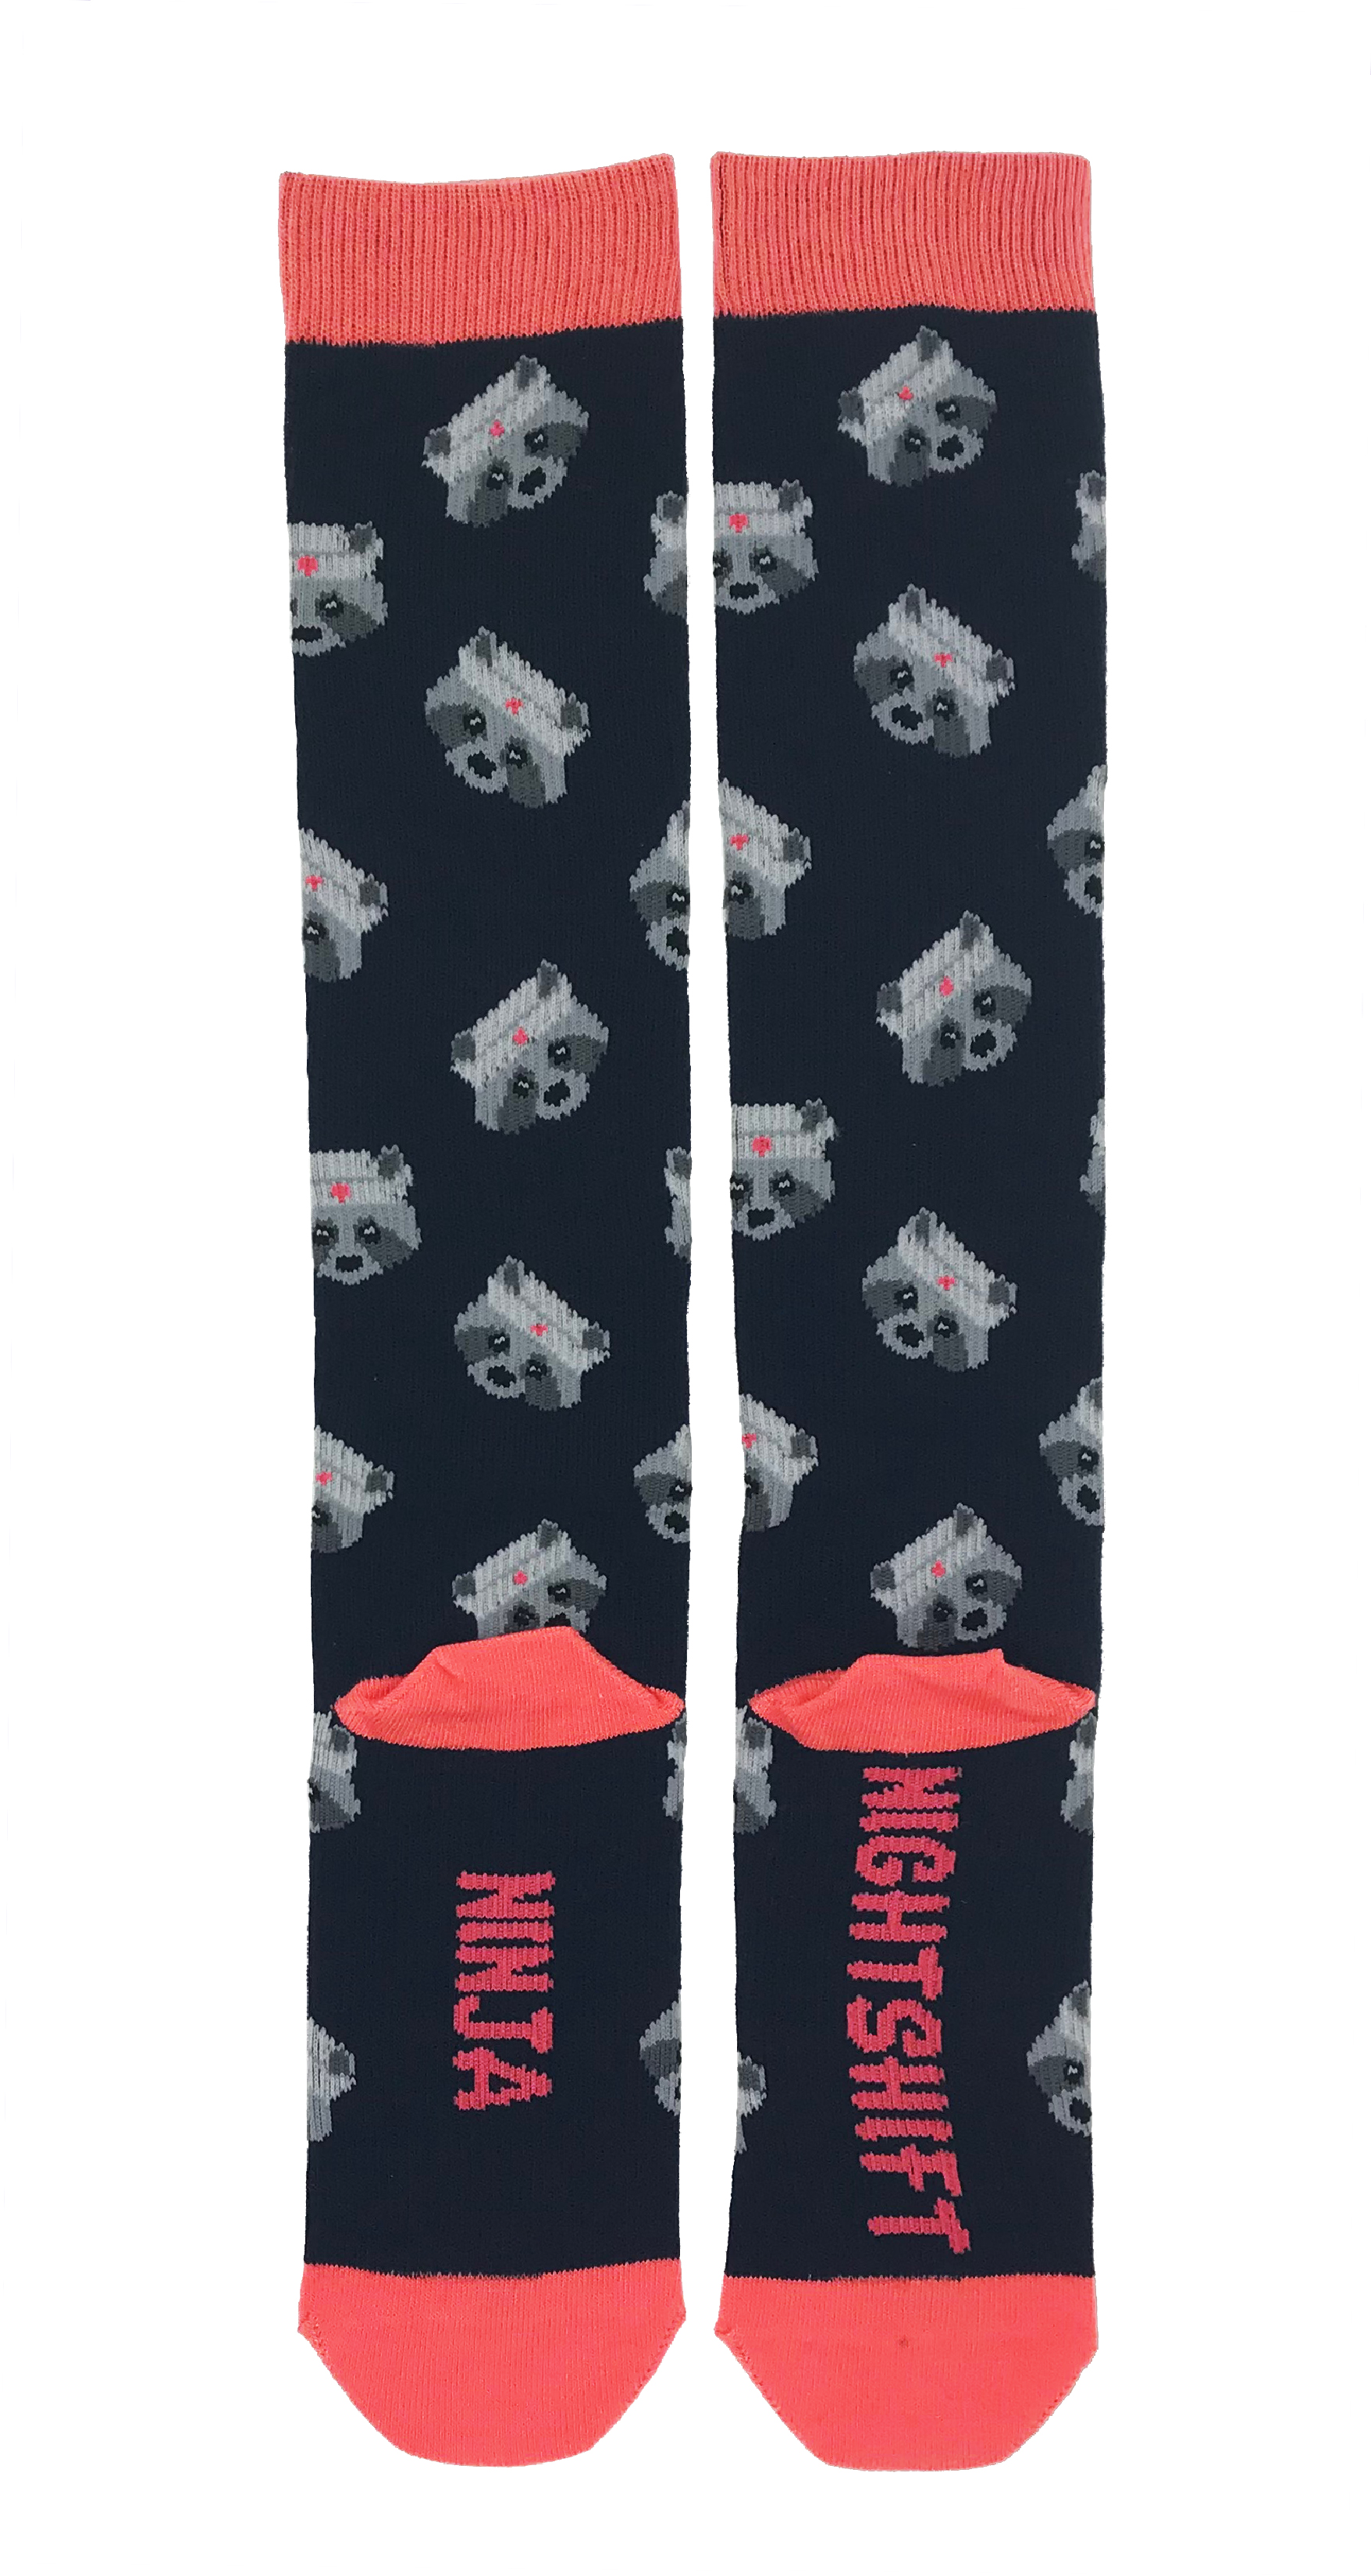 Nightshift Ninja - 15-20 mmHg Knit Compression Socks now by Cutieful!-